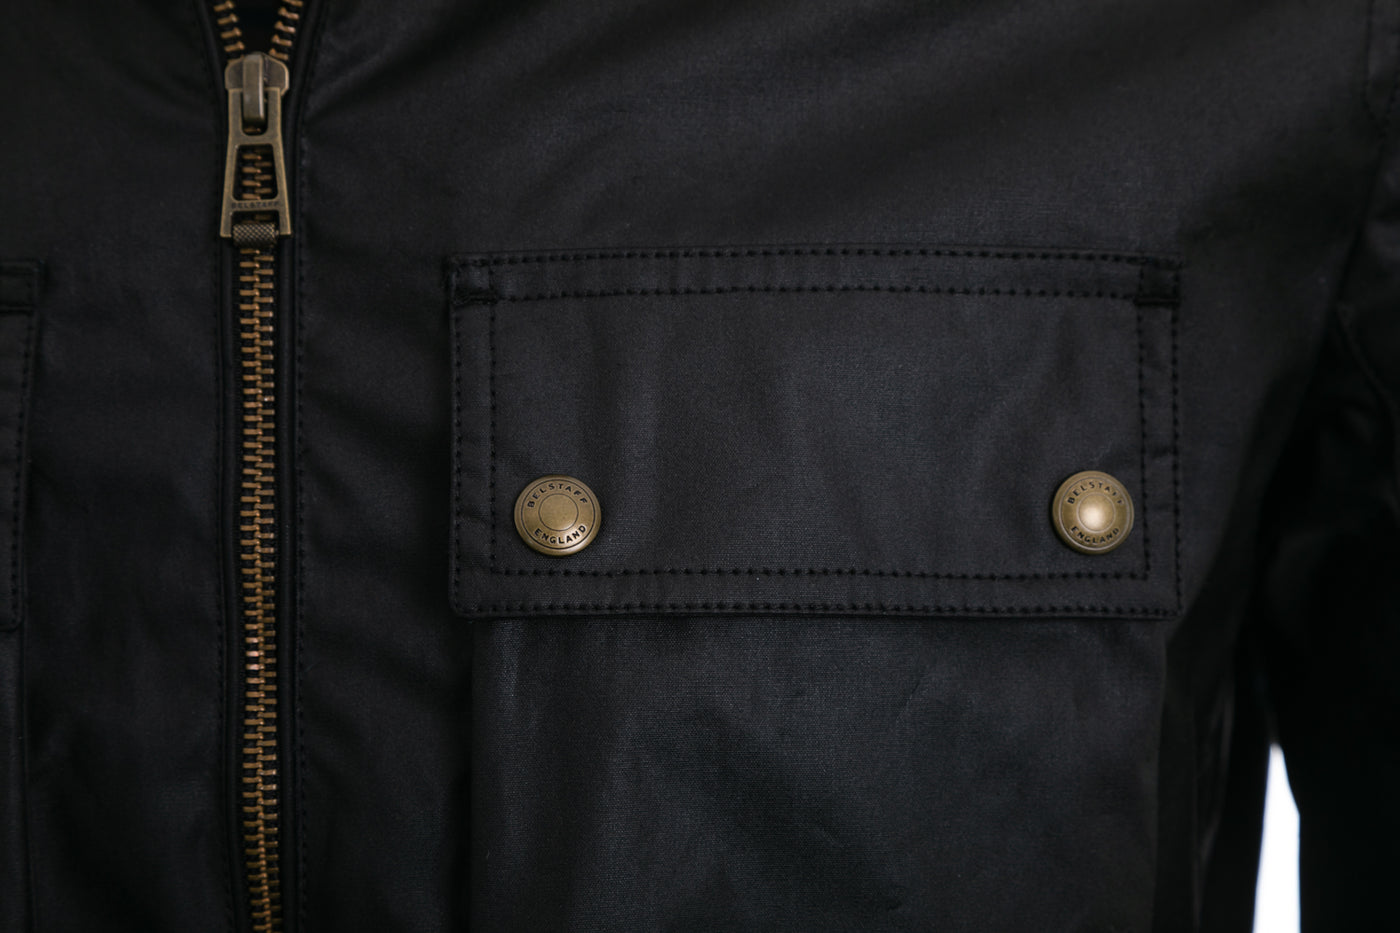 Belstaff Dunstall Jacket in Black Chest Pocket